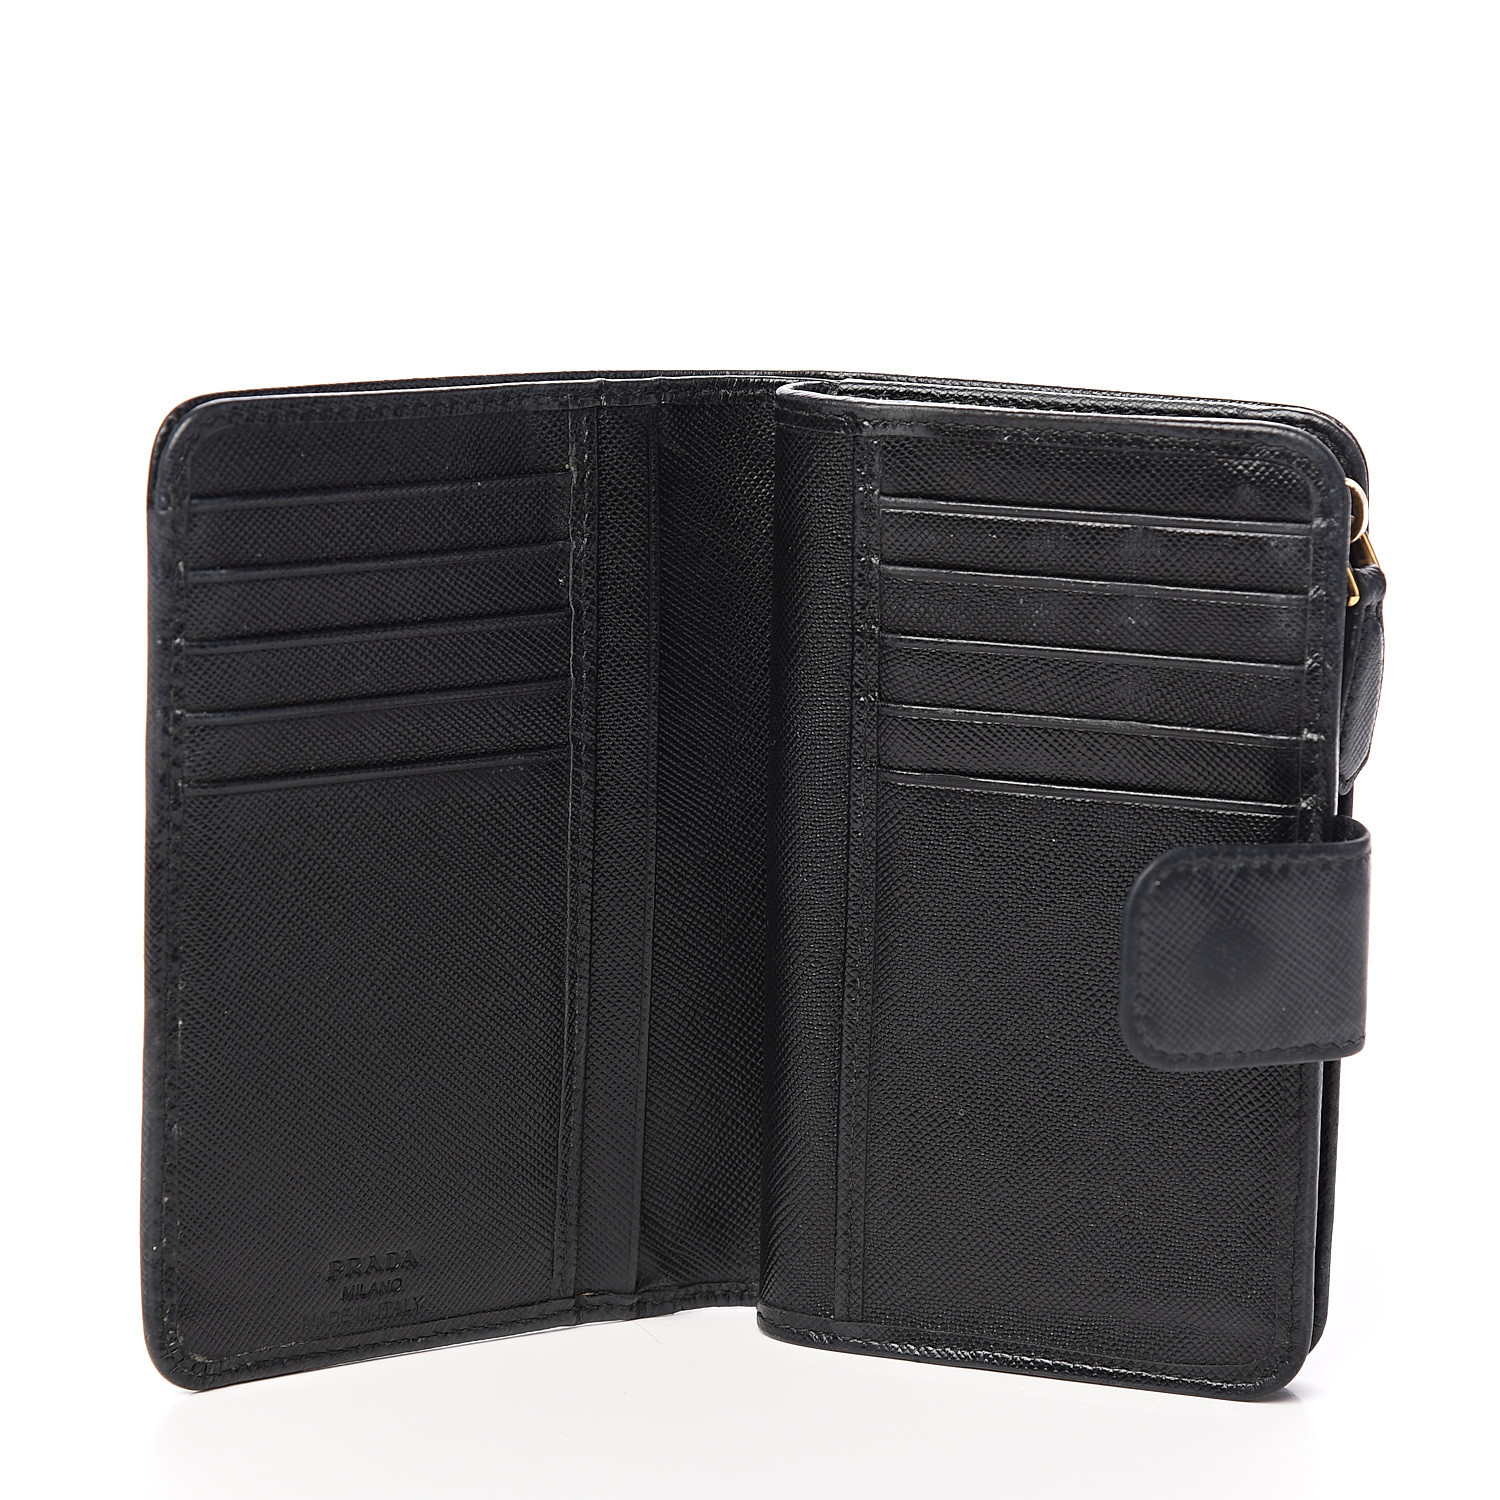 PRADA Saffiano Metal Compact Wallet Black 550981 | FASHIONPHILE